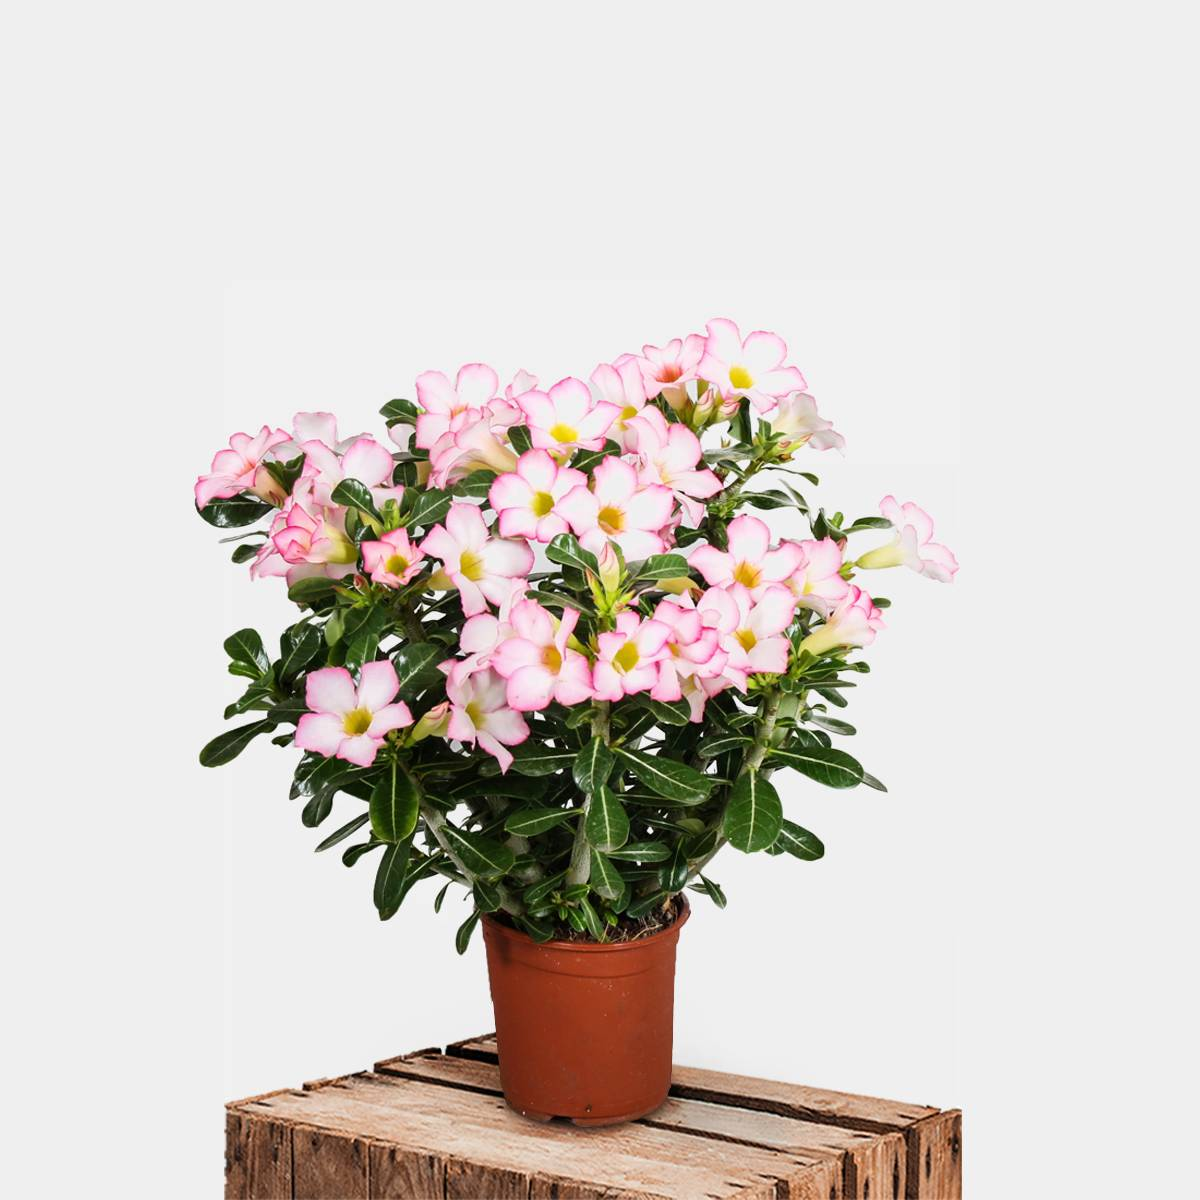 WEYE-Adenium Obesum-Rose du désert,De Fleurs Plante Vivace Jardin